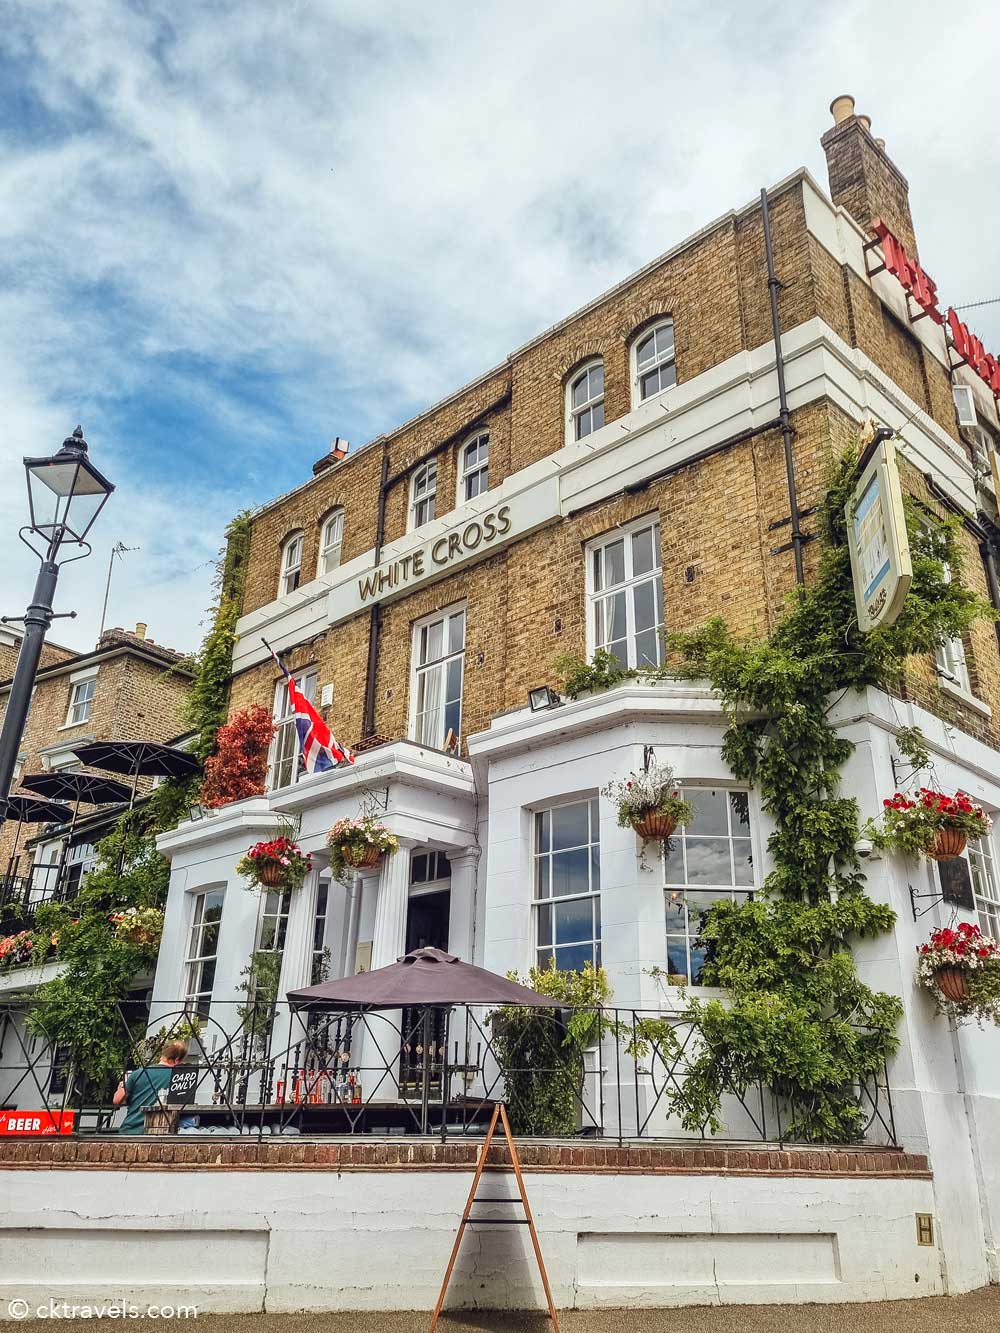 The White Cross riverside pub in Richmond London